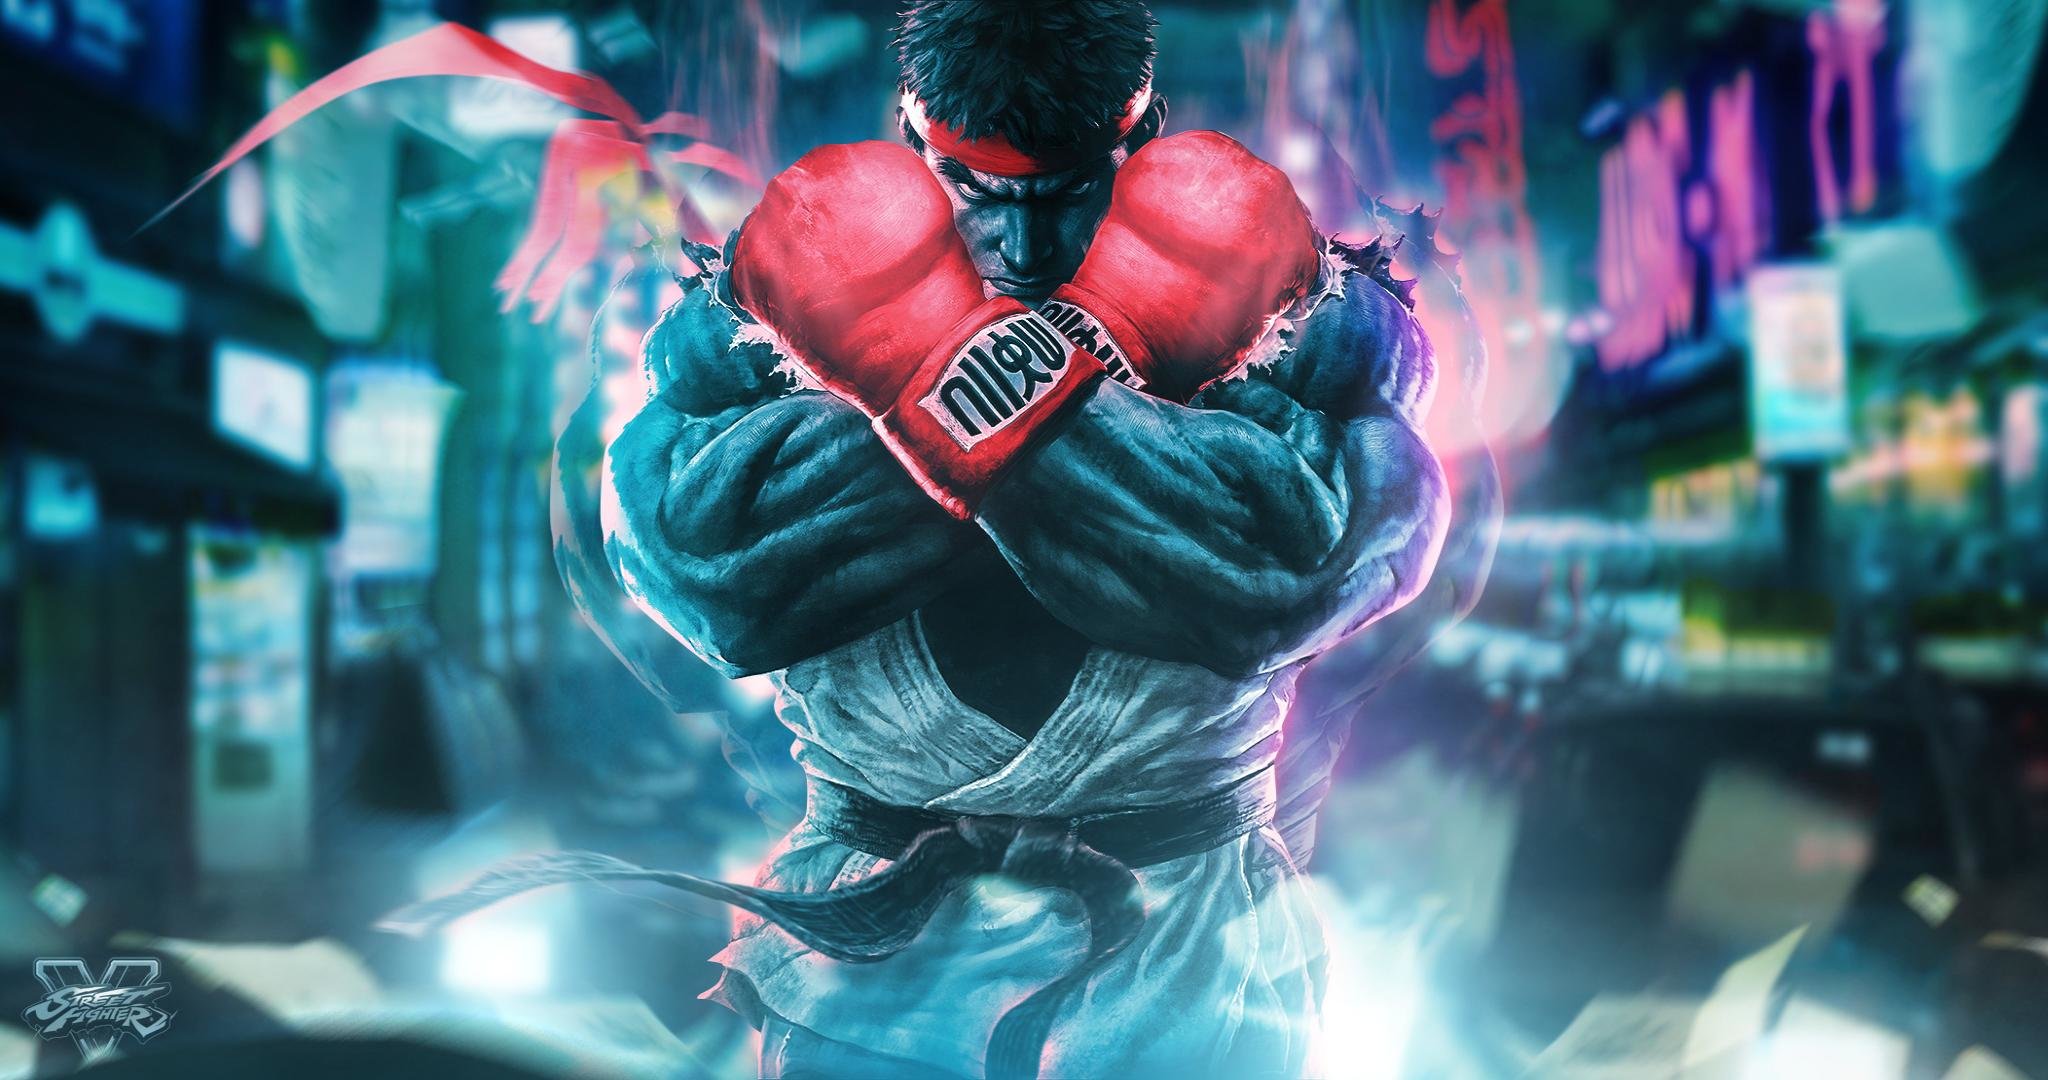 Best Ryu (Street Fighter) wallpaper ID:466483 for High Resolution hd 2048x1080 computer